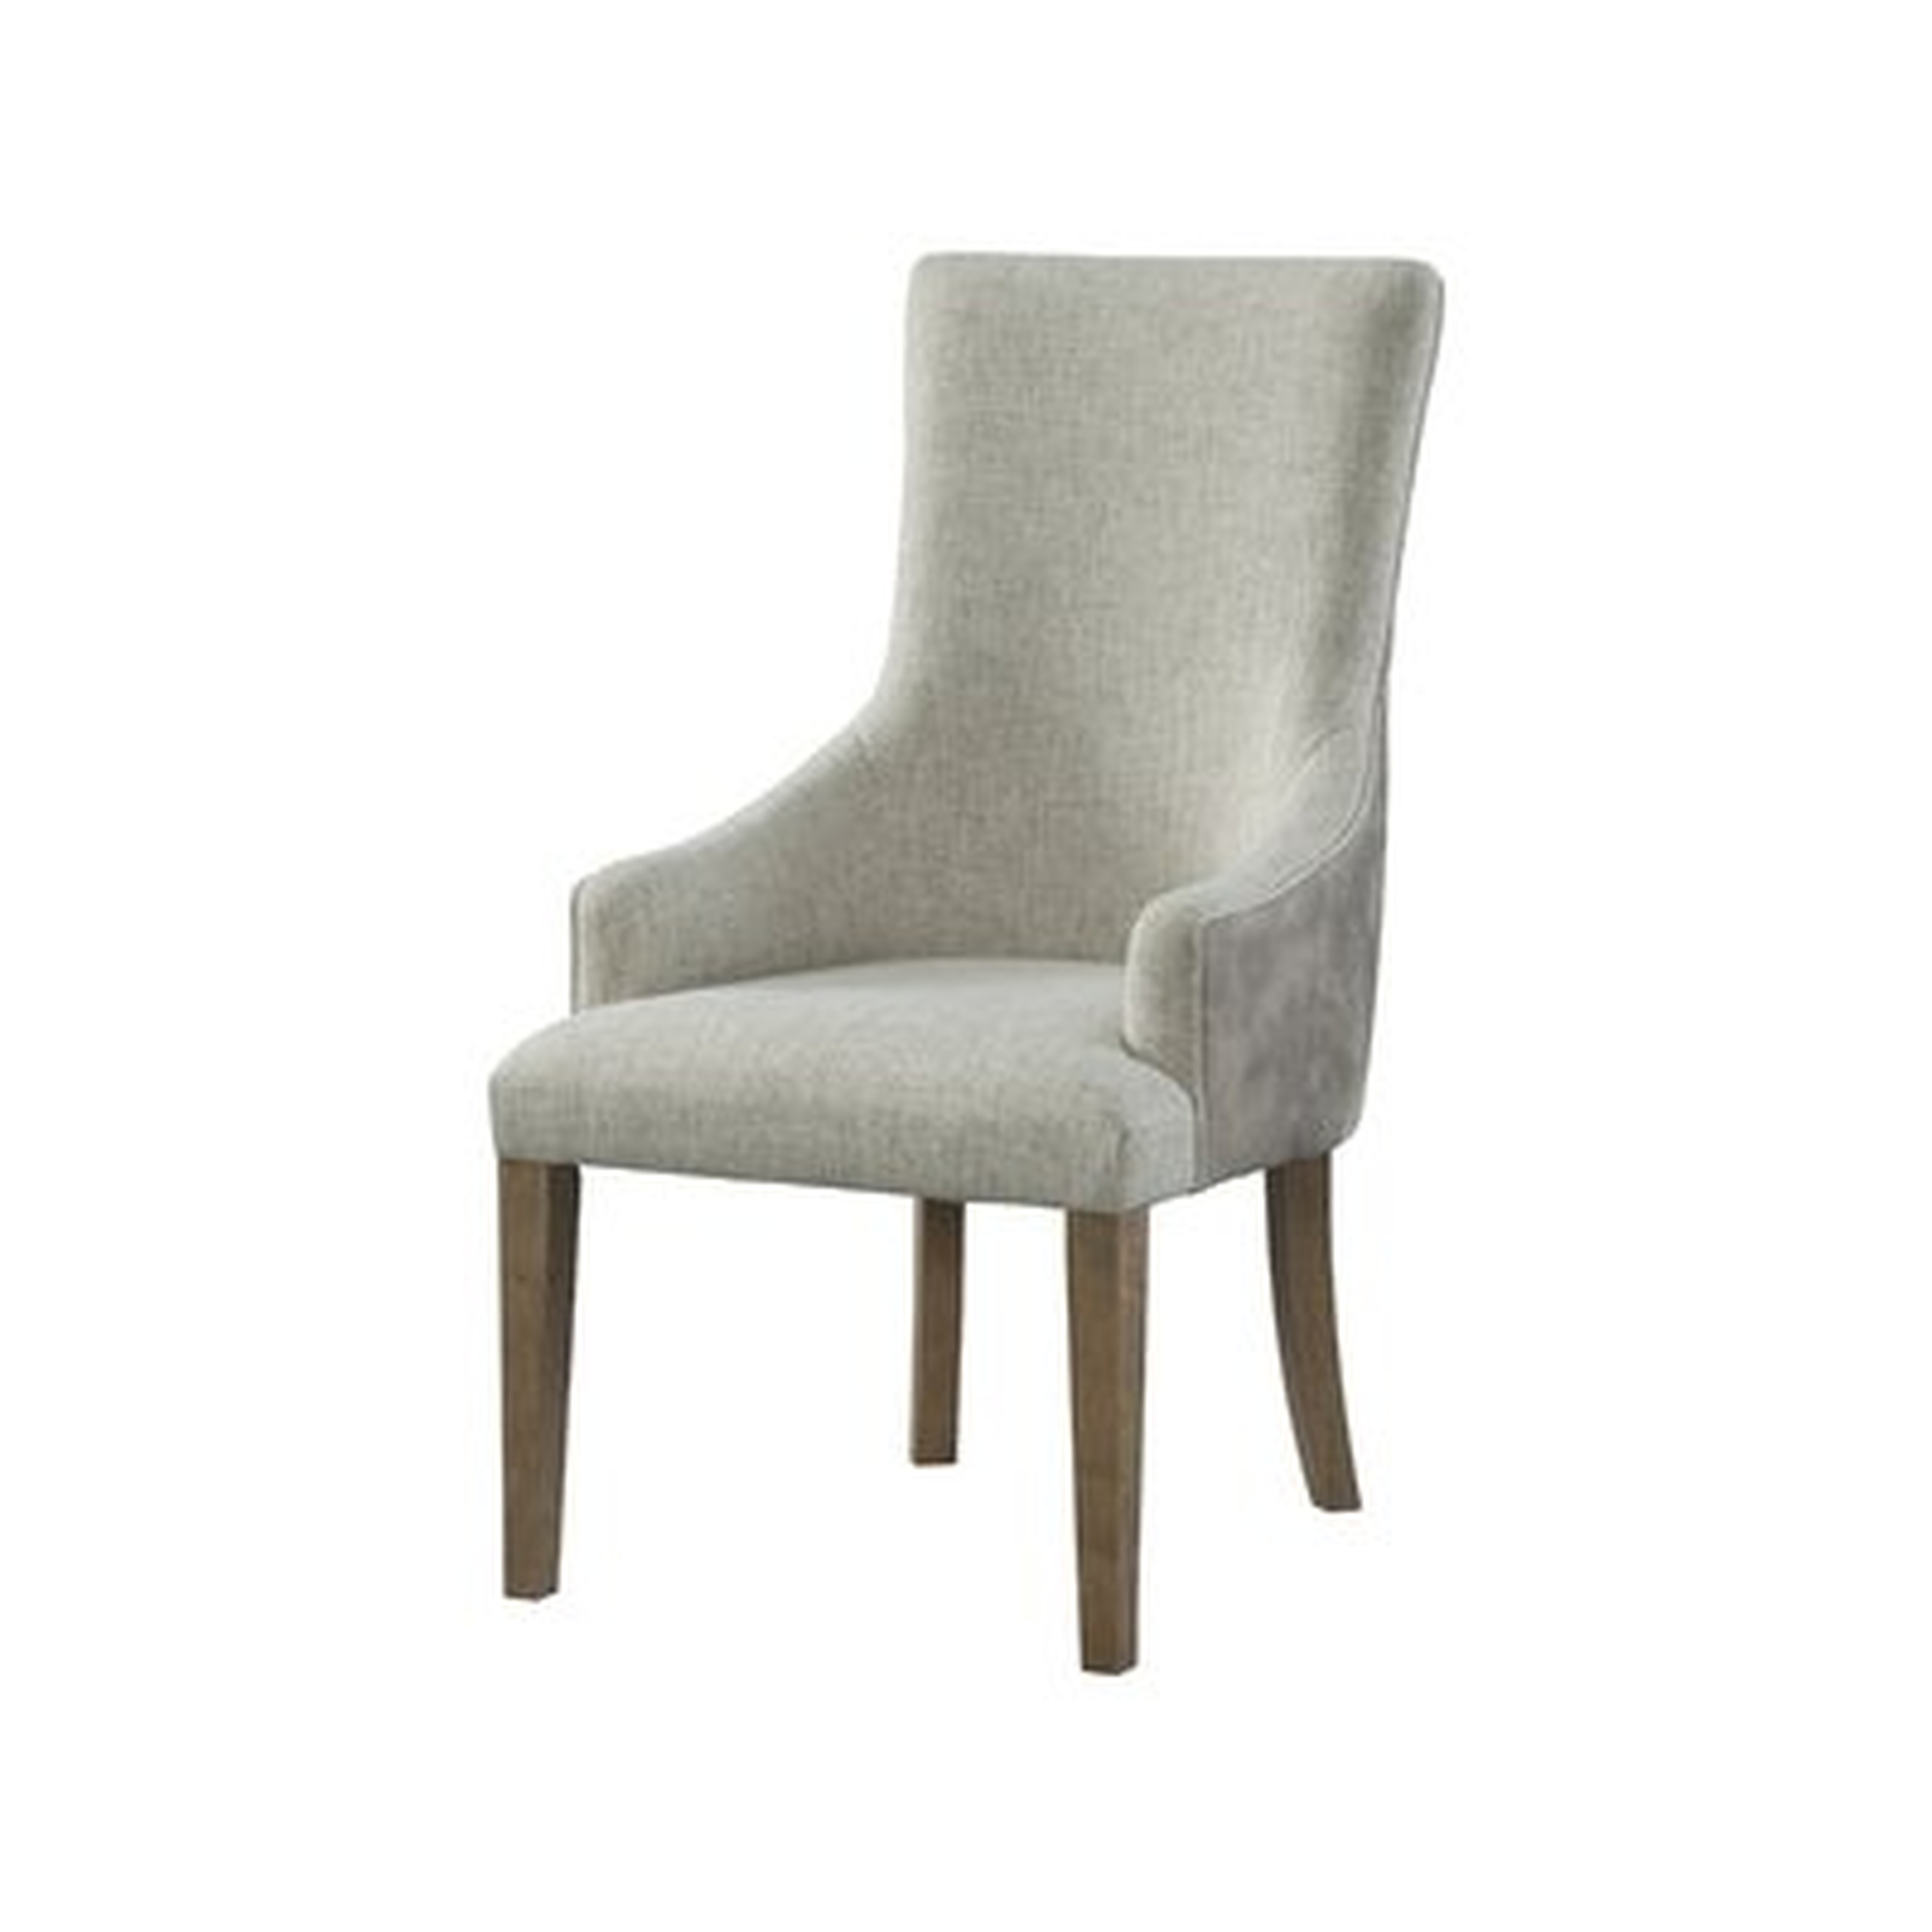 Schwenk Upholstered Dining Chair - Wayfair